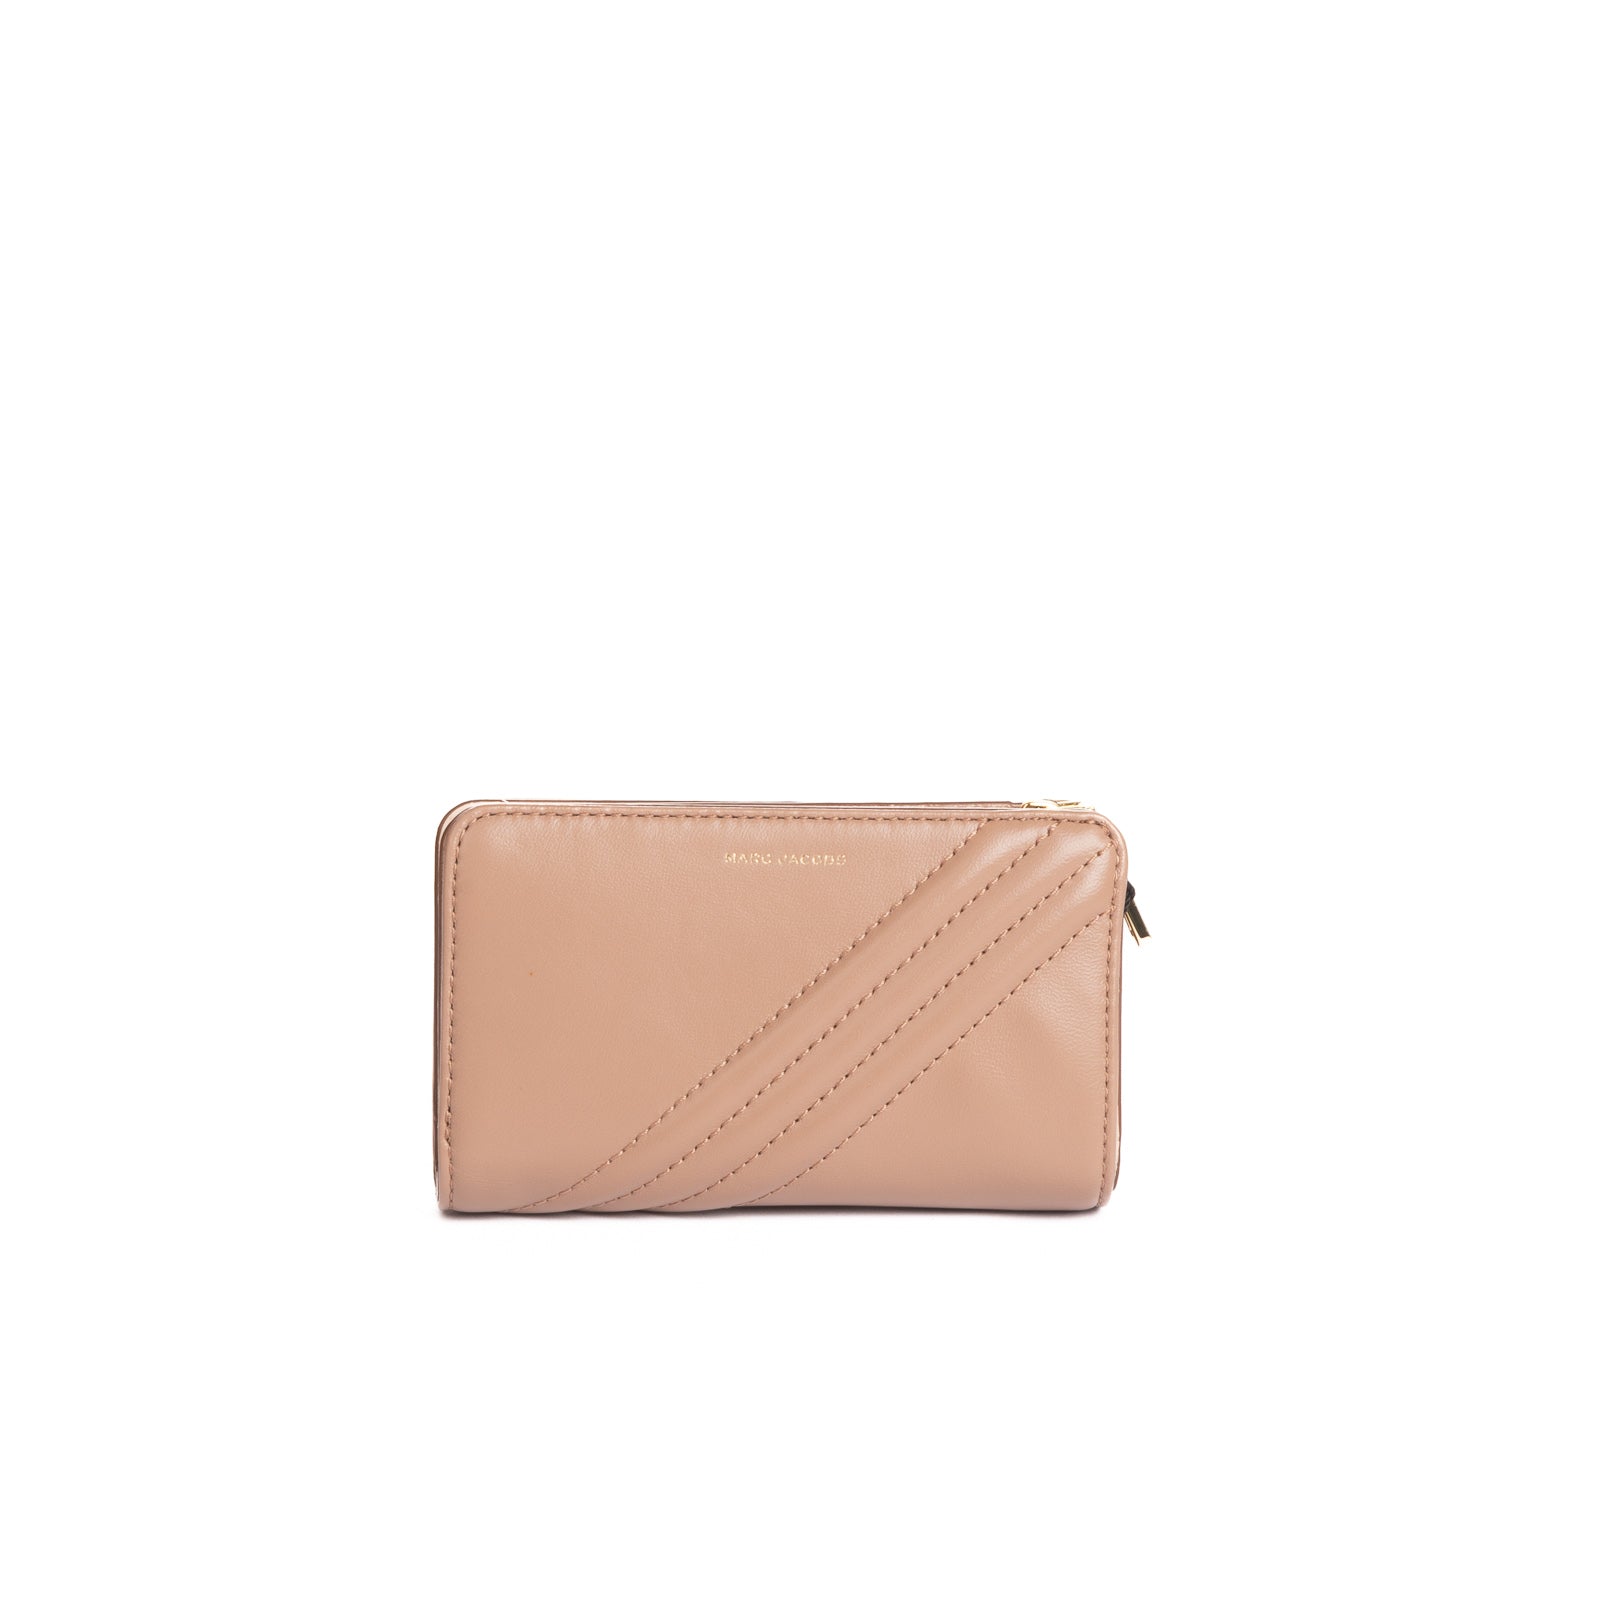 Portafogli MARC JACOBS Compact wallet
Dusty beige